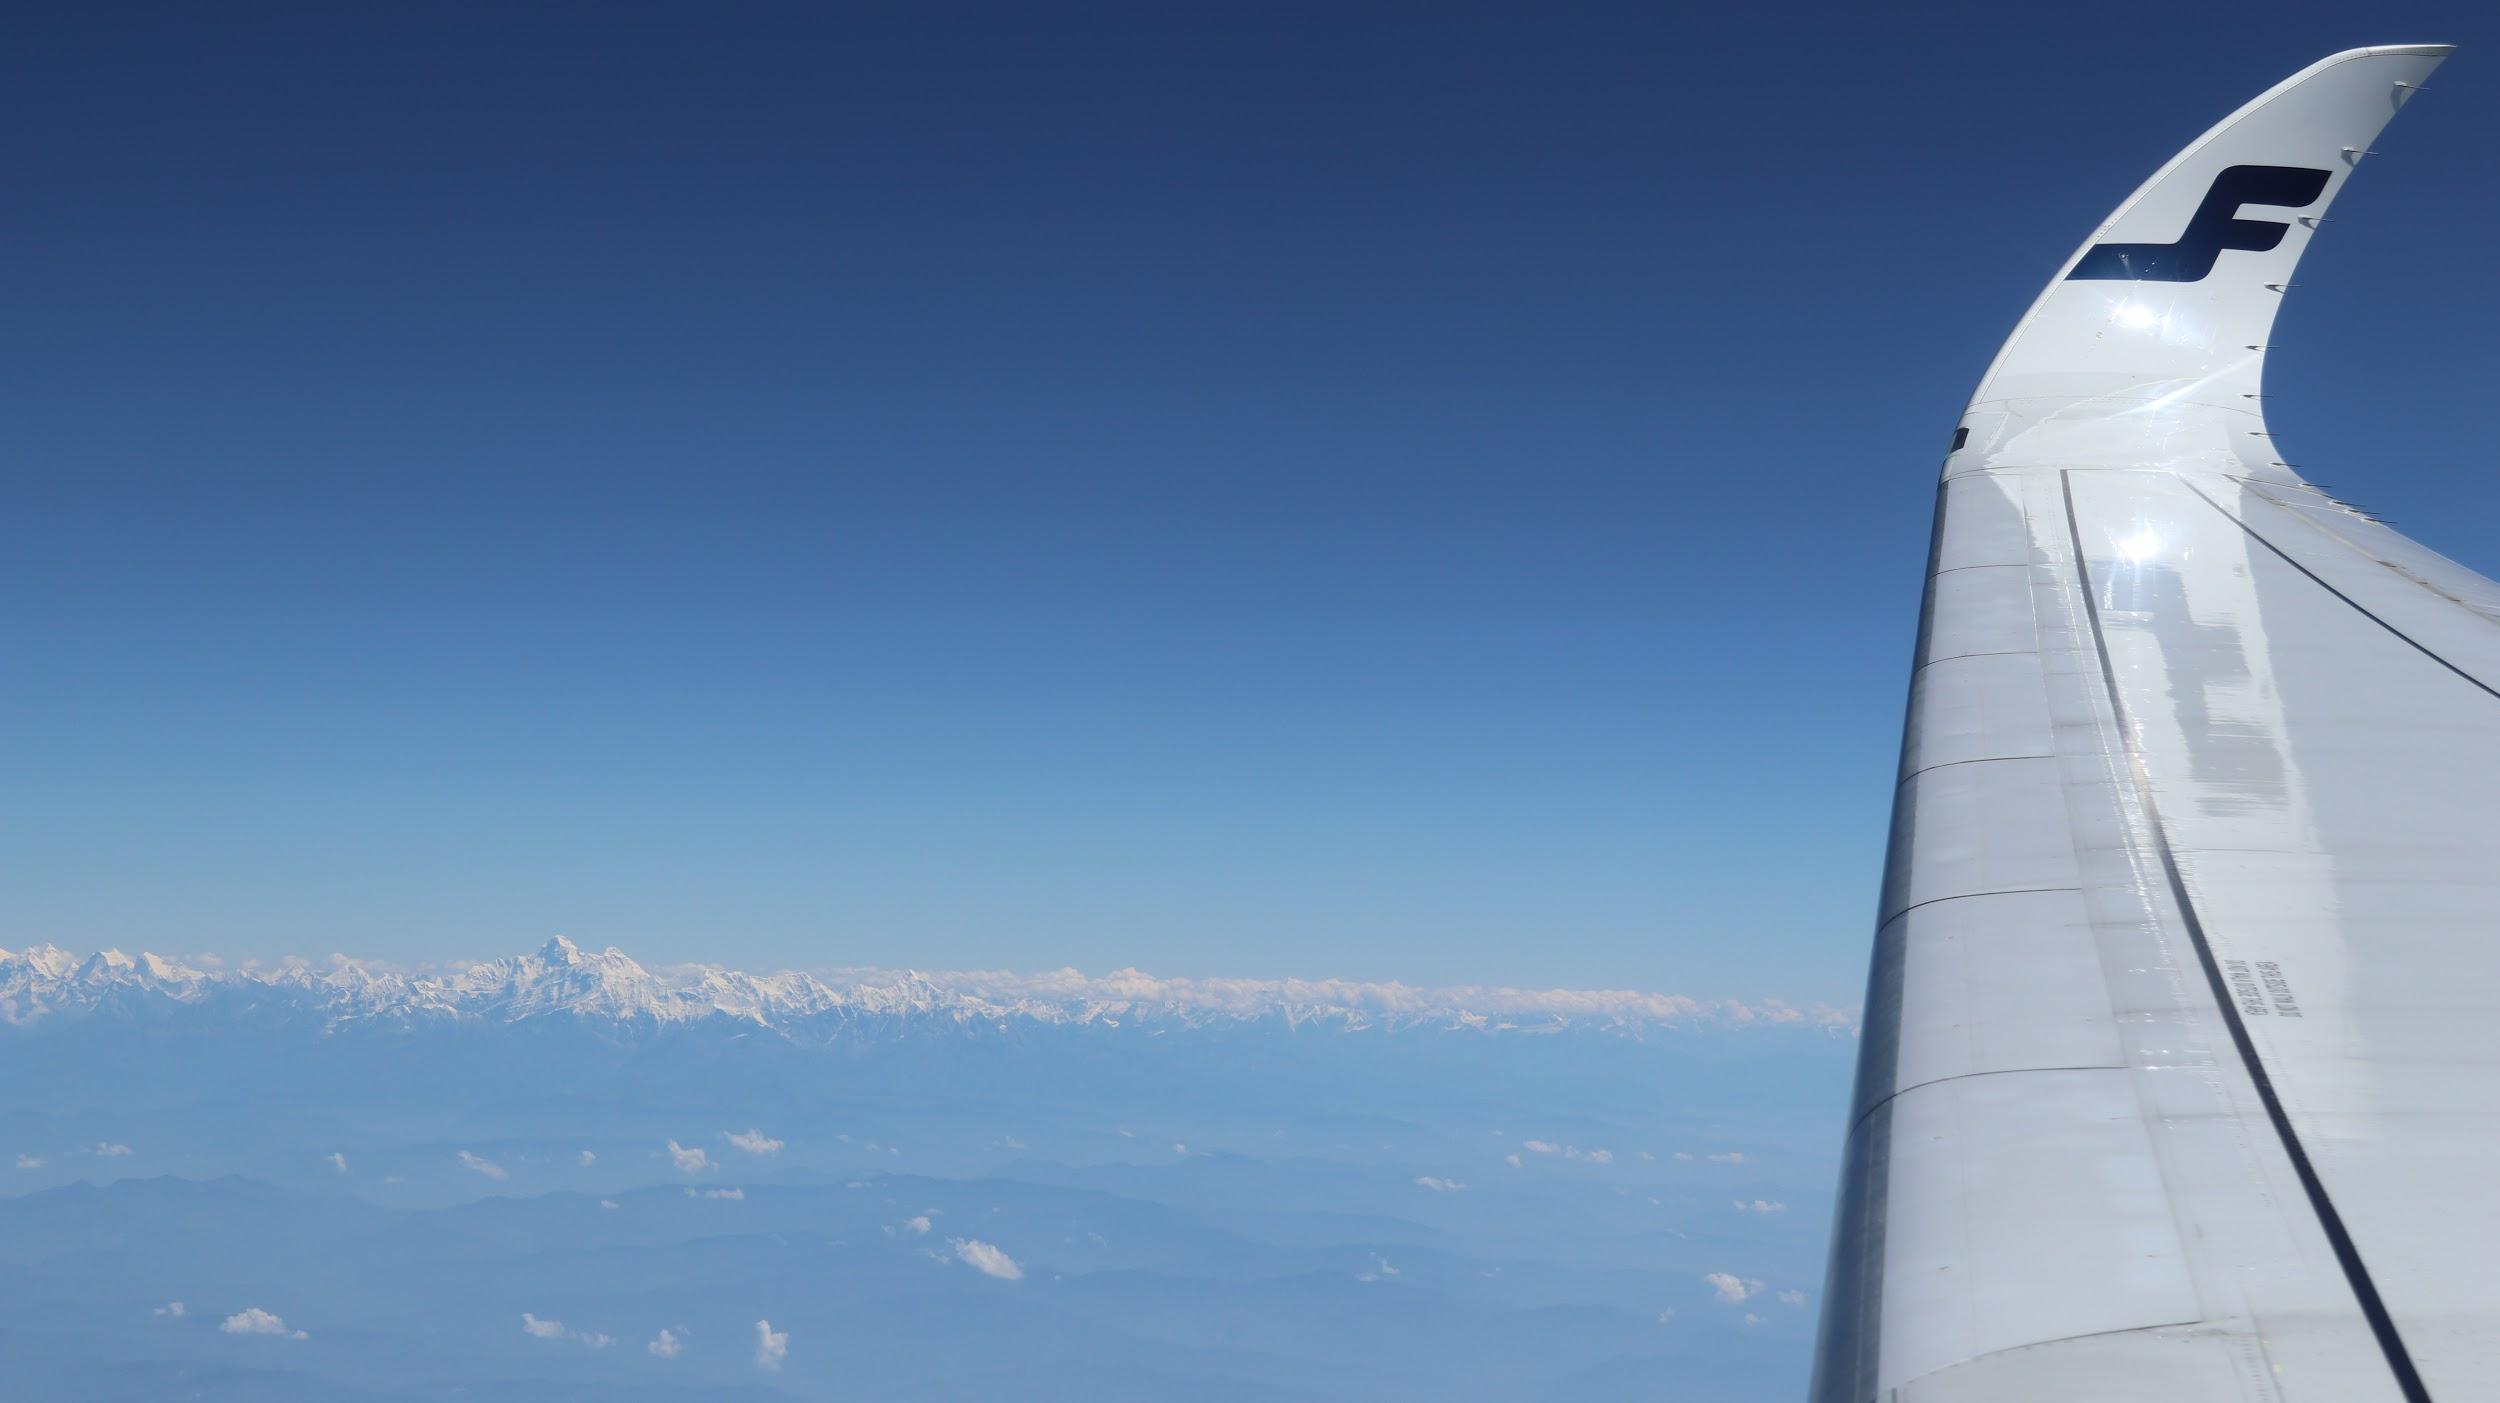 View of Mt. Everest from Finnair flight